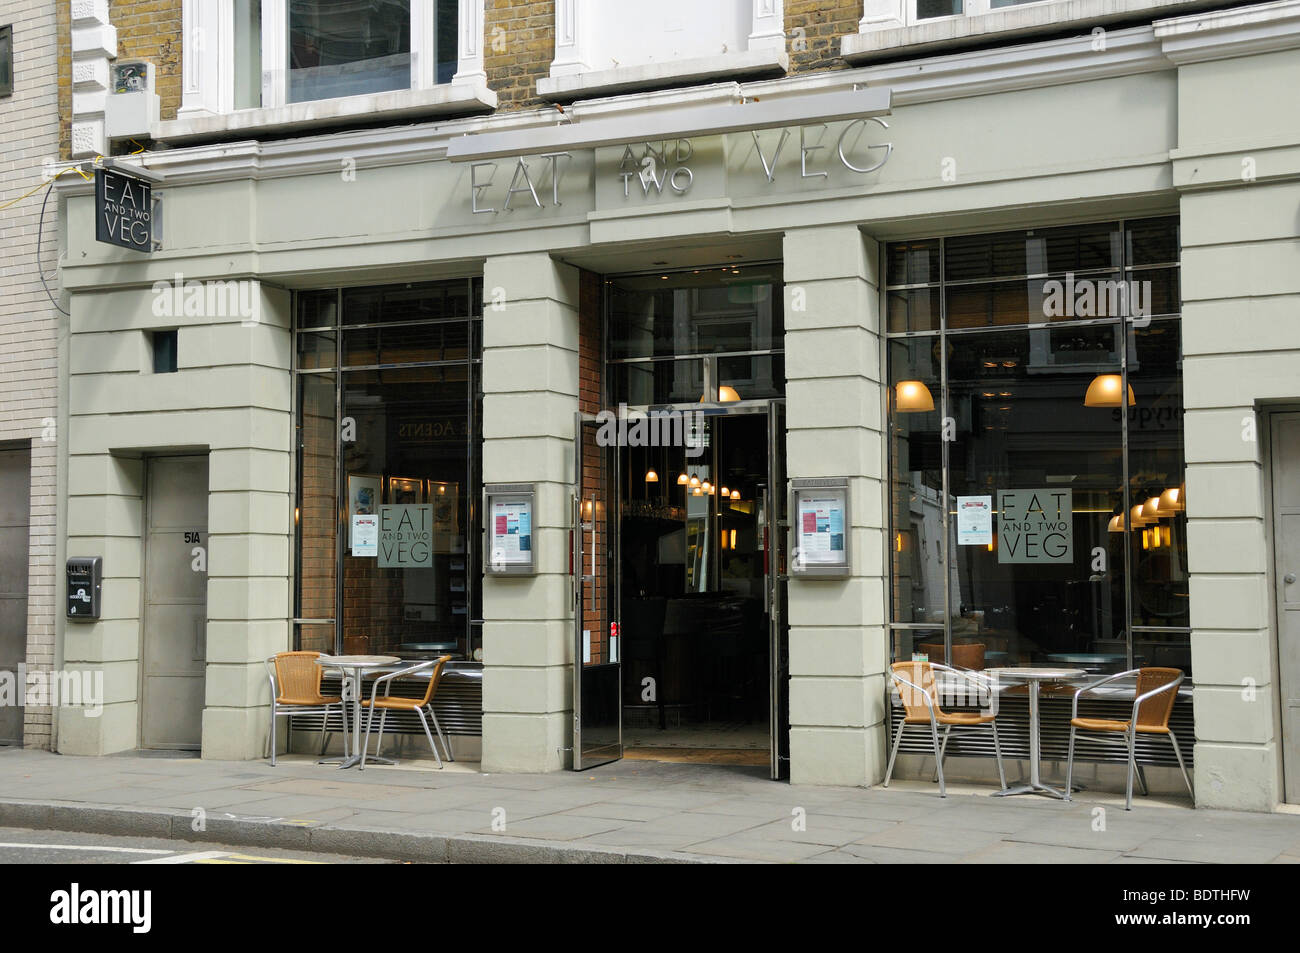 Eat and two Veg restaurant Marylebone High Street London England UK ...